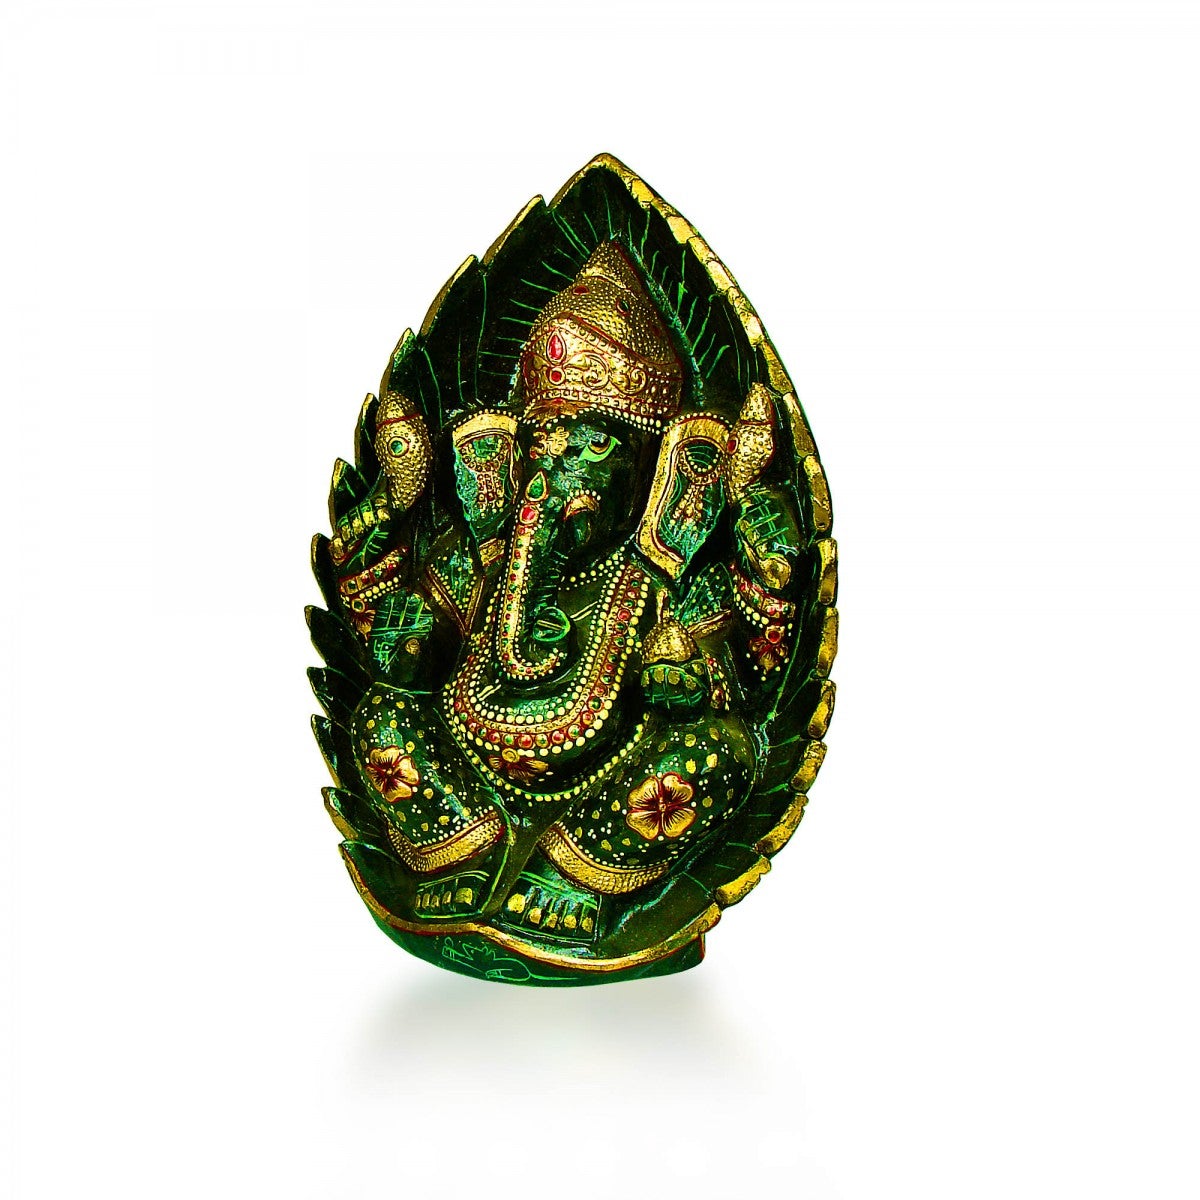 God Idols Creative Idol of Lord Ganesha Carved on Dark Green Jade Stone Image 1